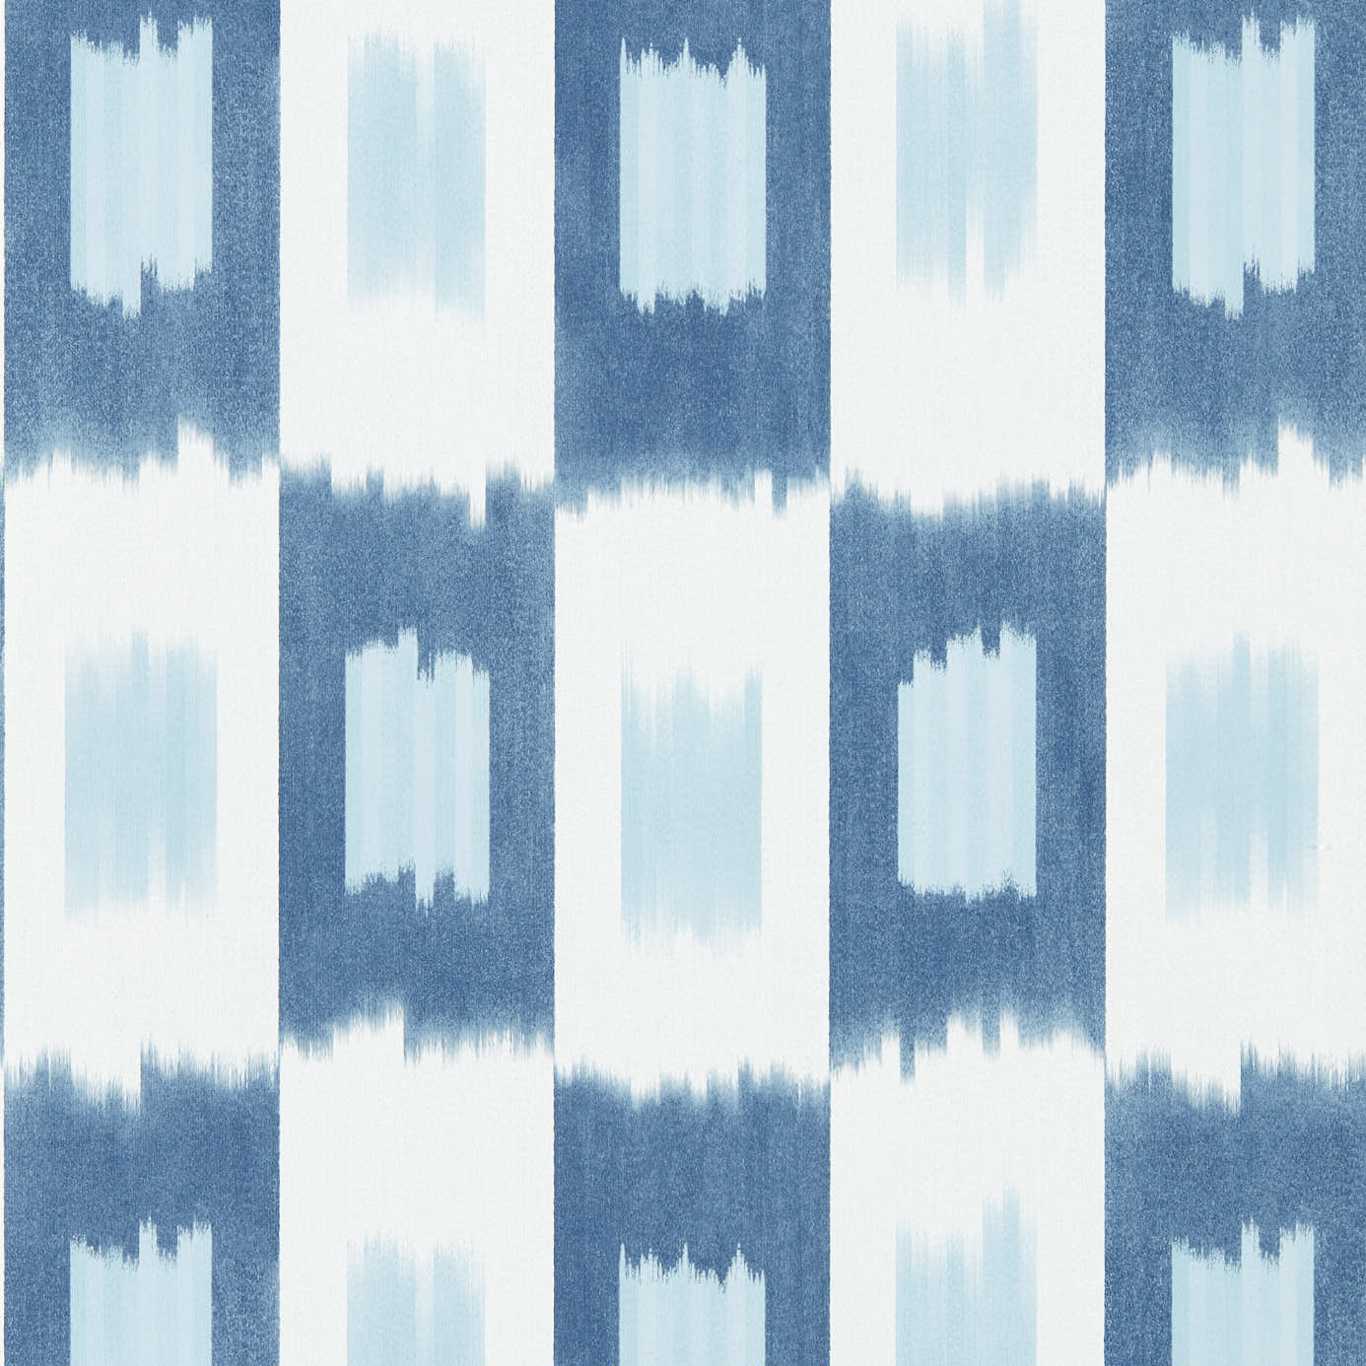 Shiruku Wild Water/Azul/Exhale Wallpaper HQN3112922 by Harlequin